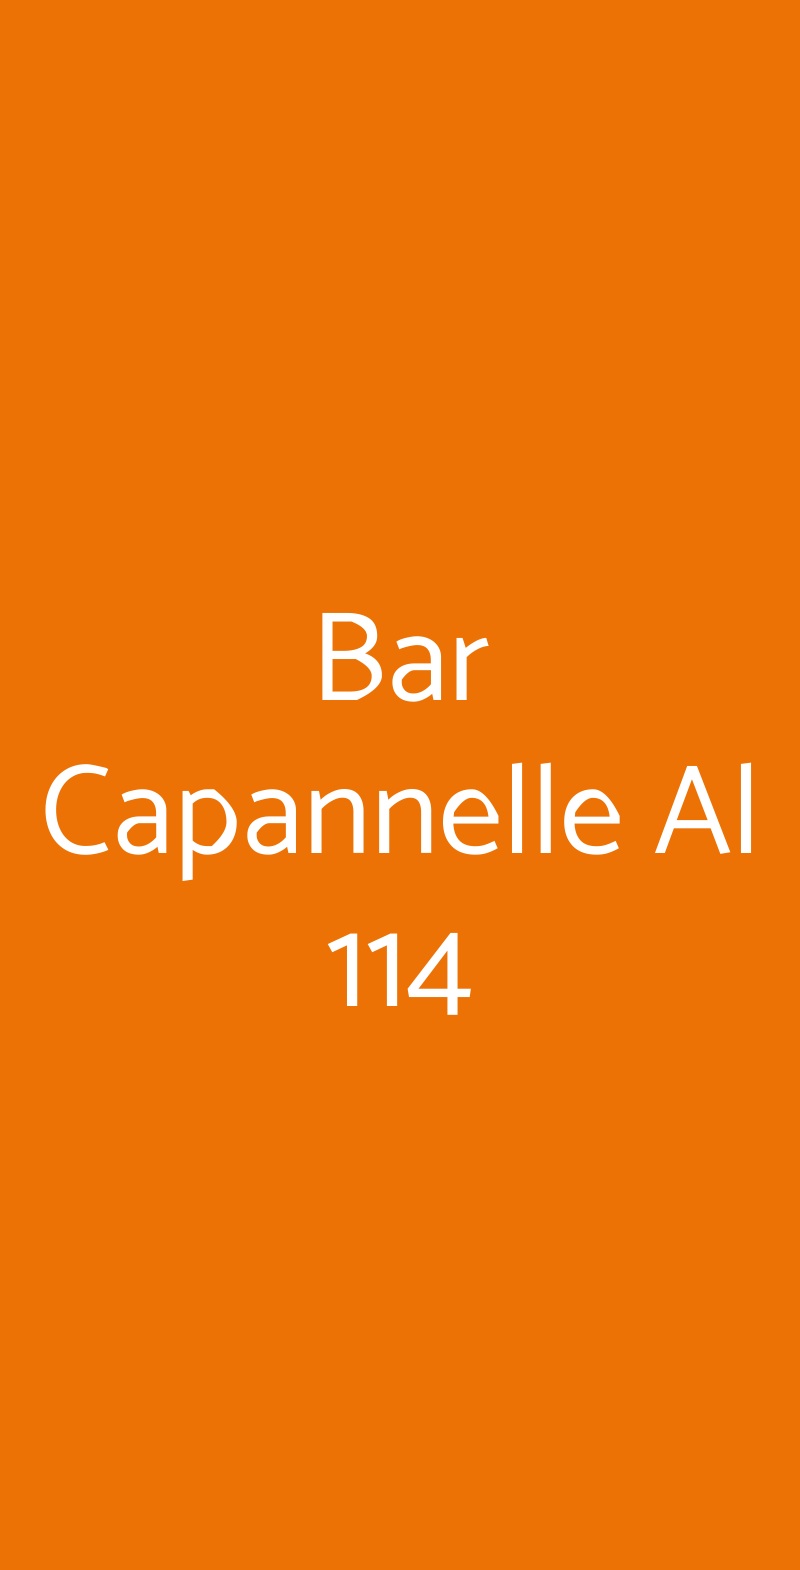 Bar Capannelle Al 114 Roma menù 1 pagina